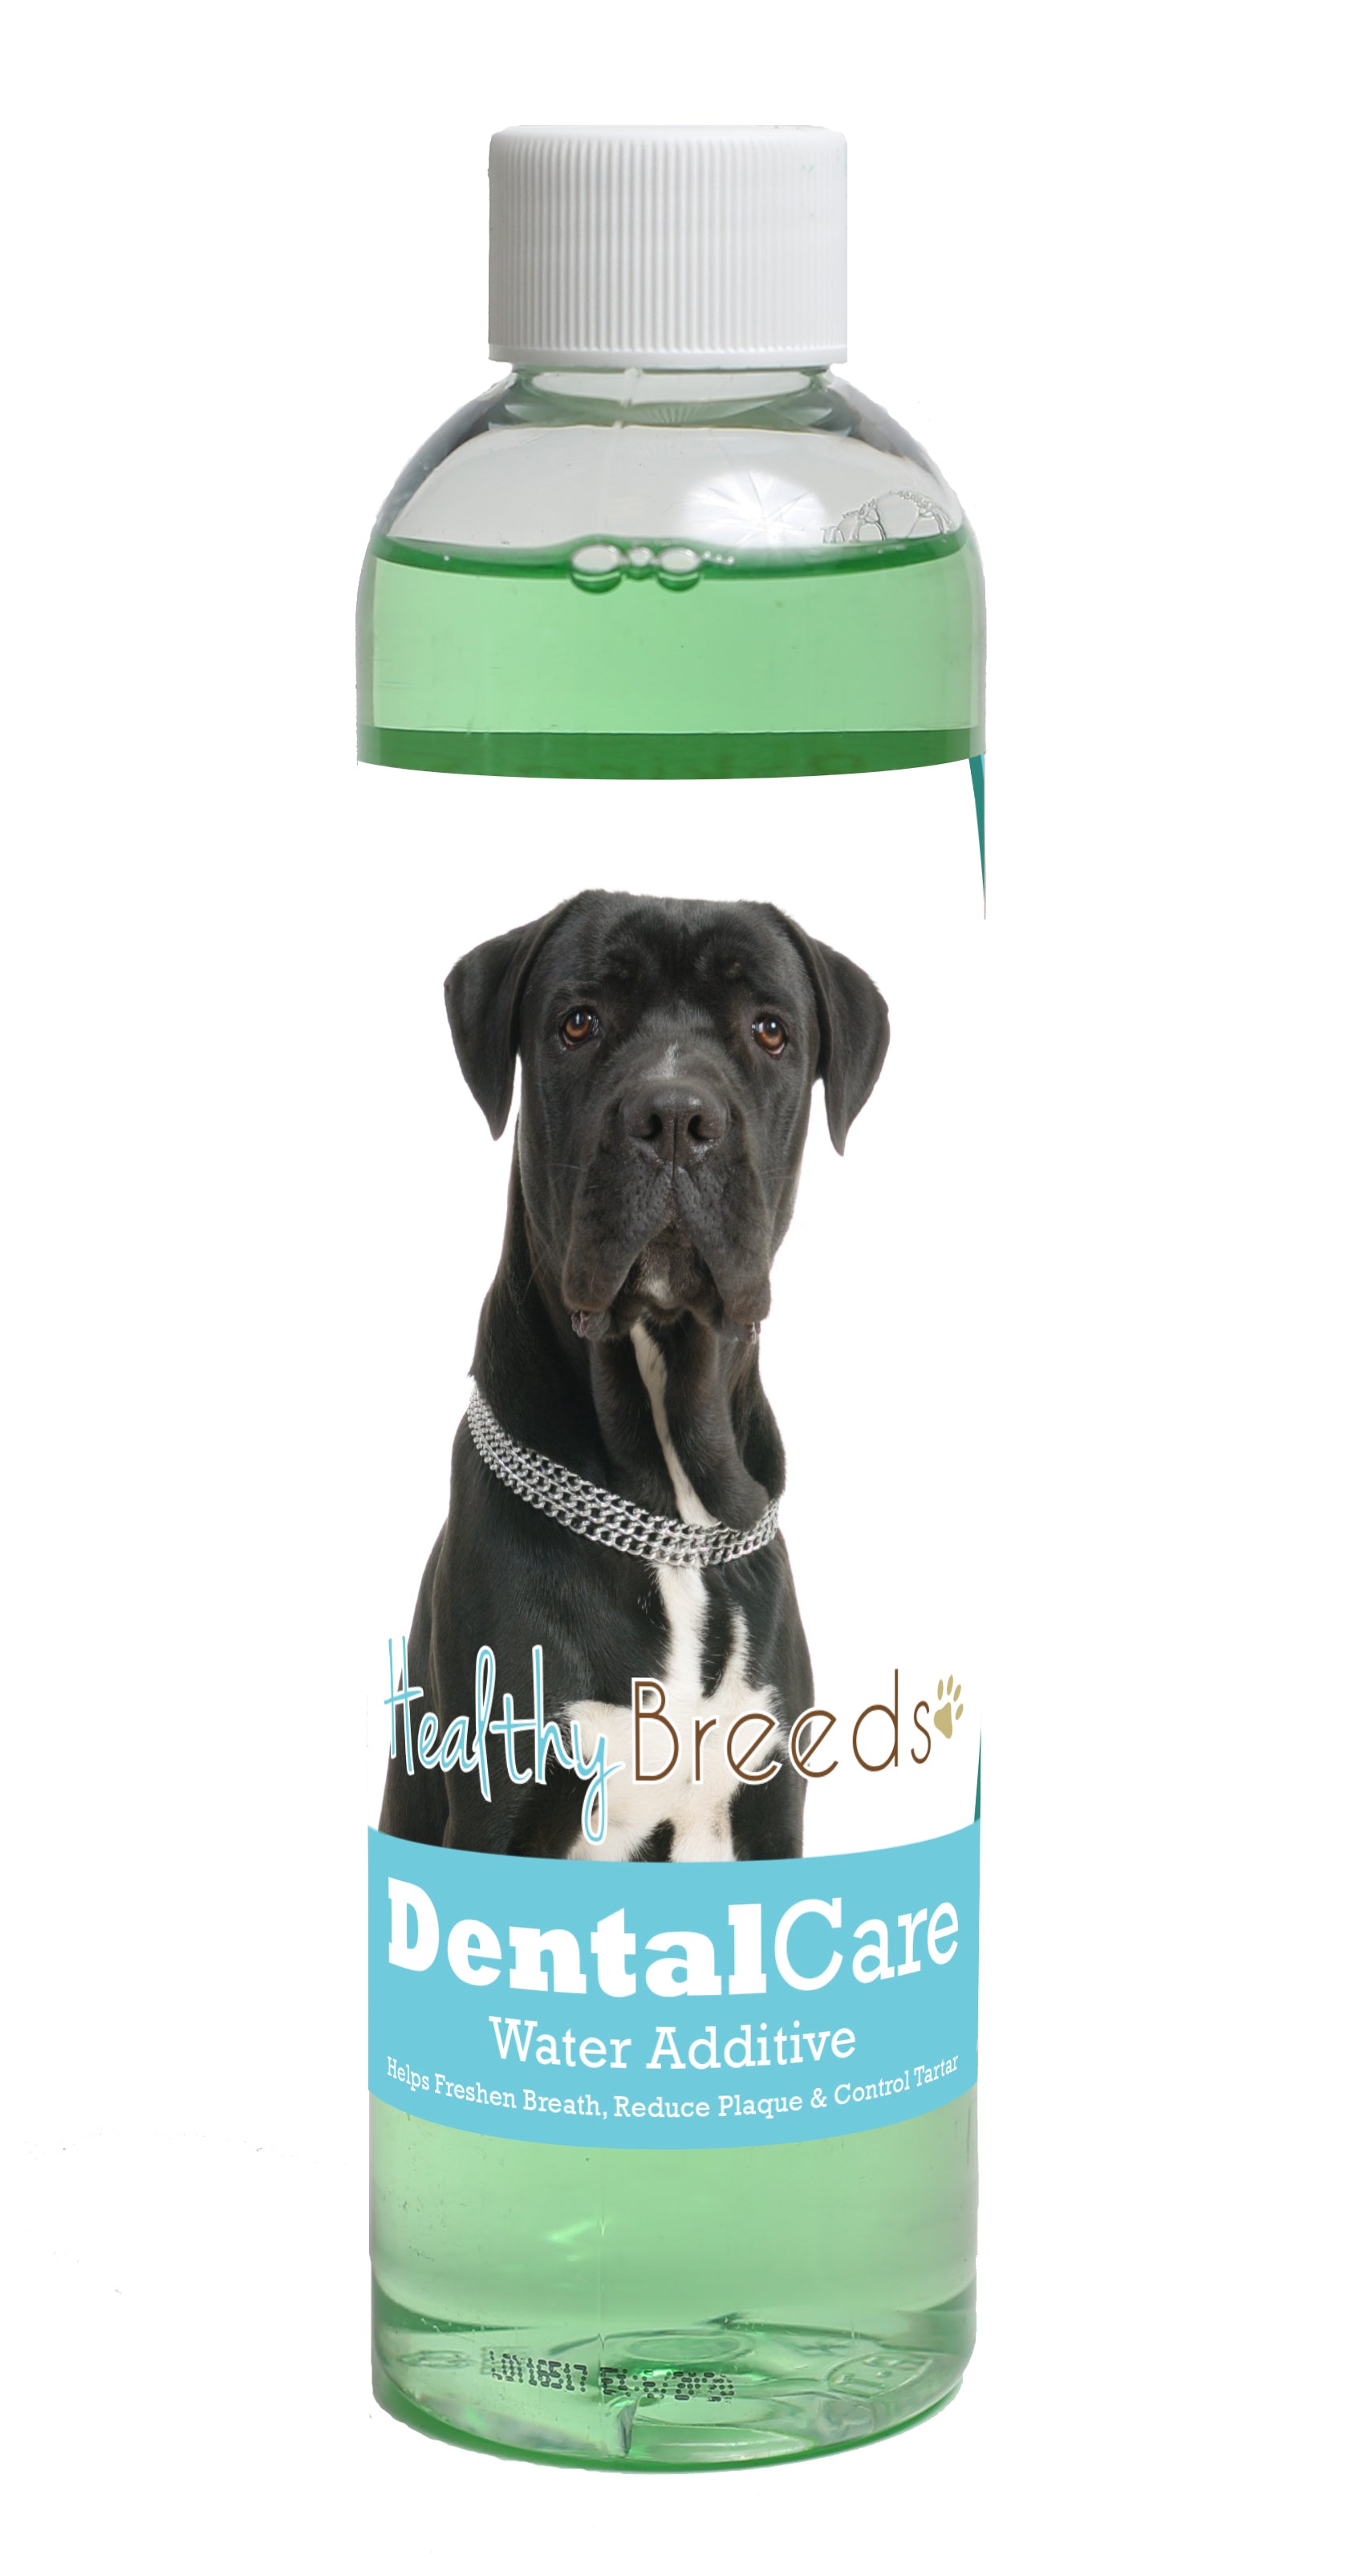 Cane Corso Dental Rinse for Dogs 8 oz